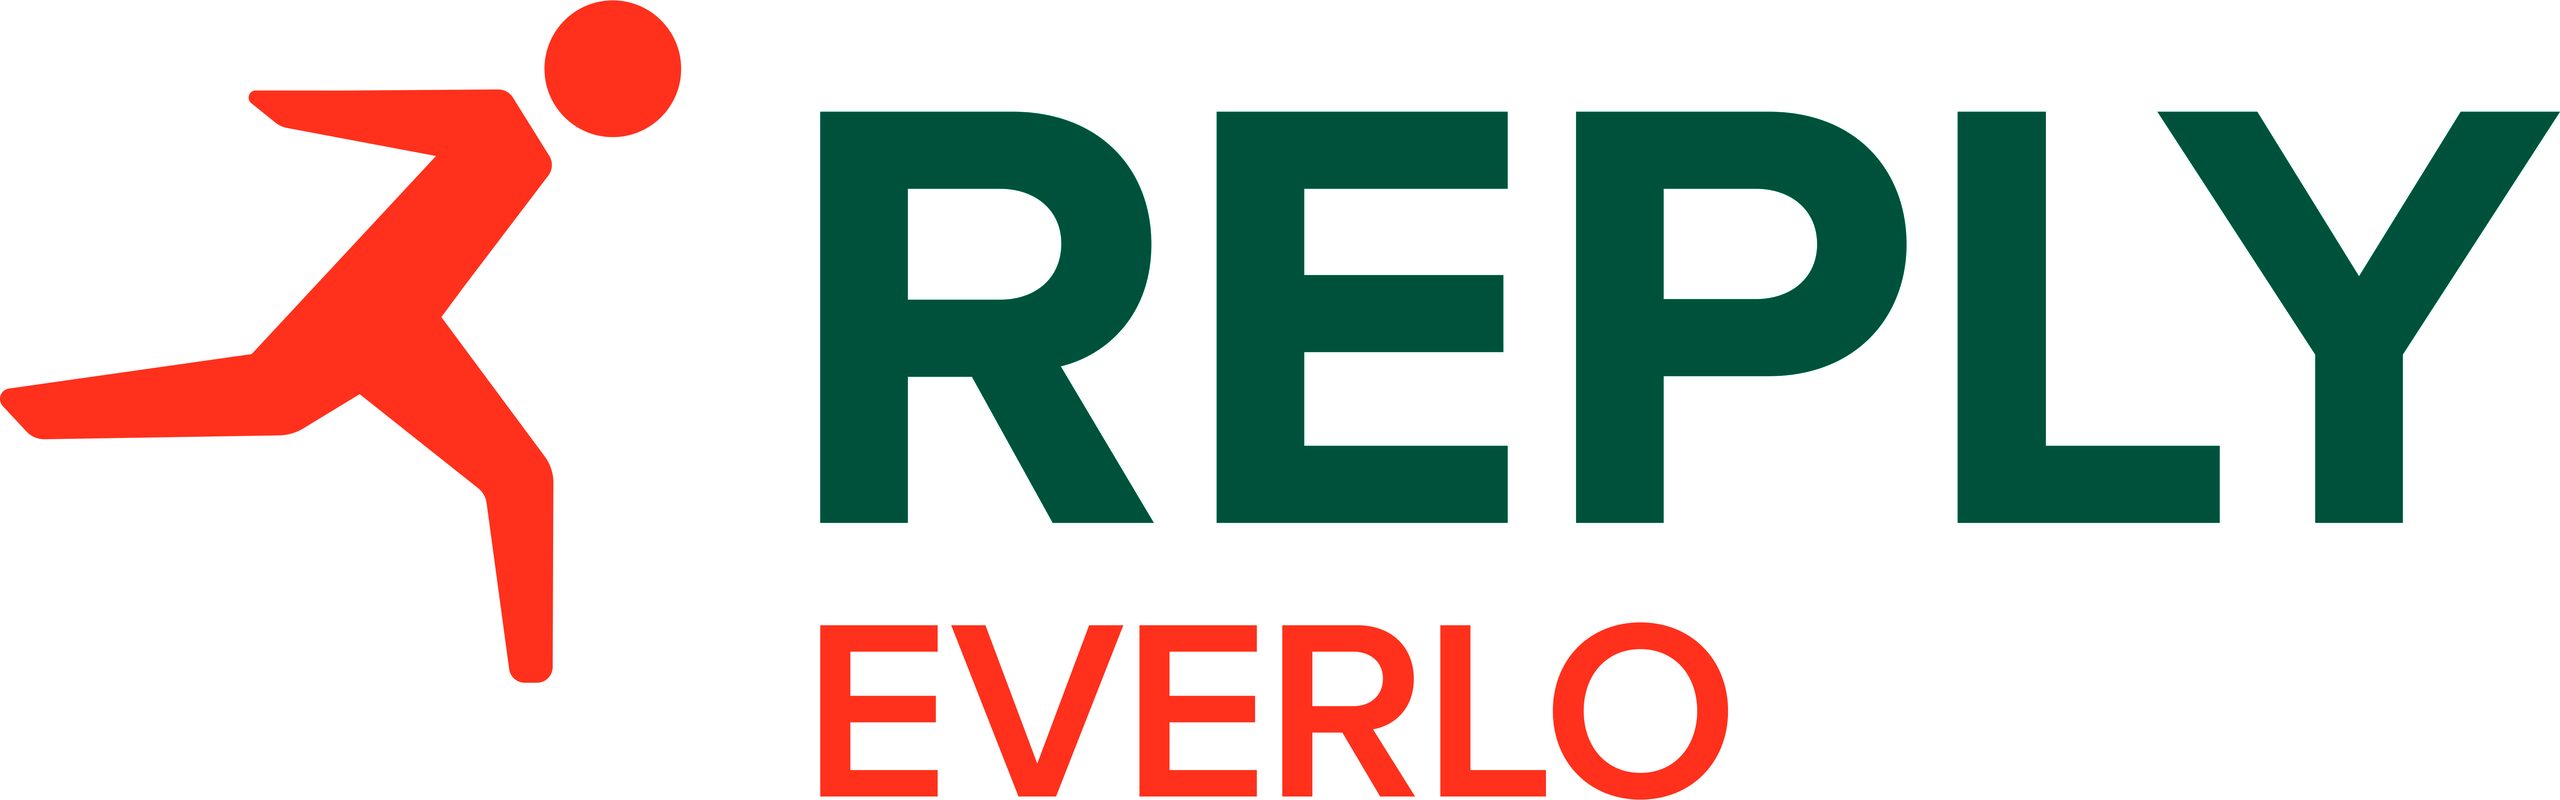 Everlo Reply logo